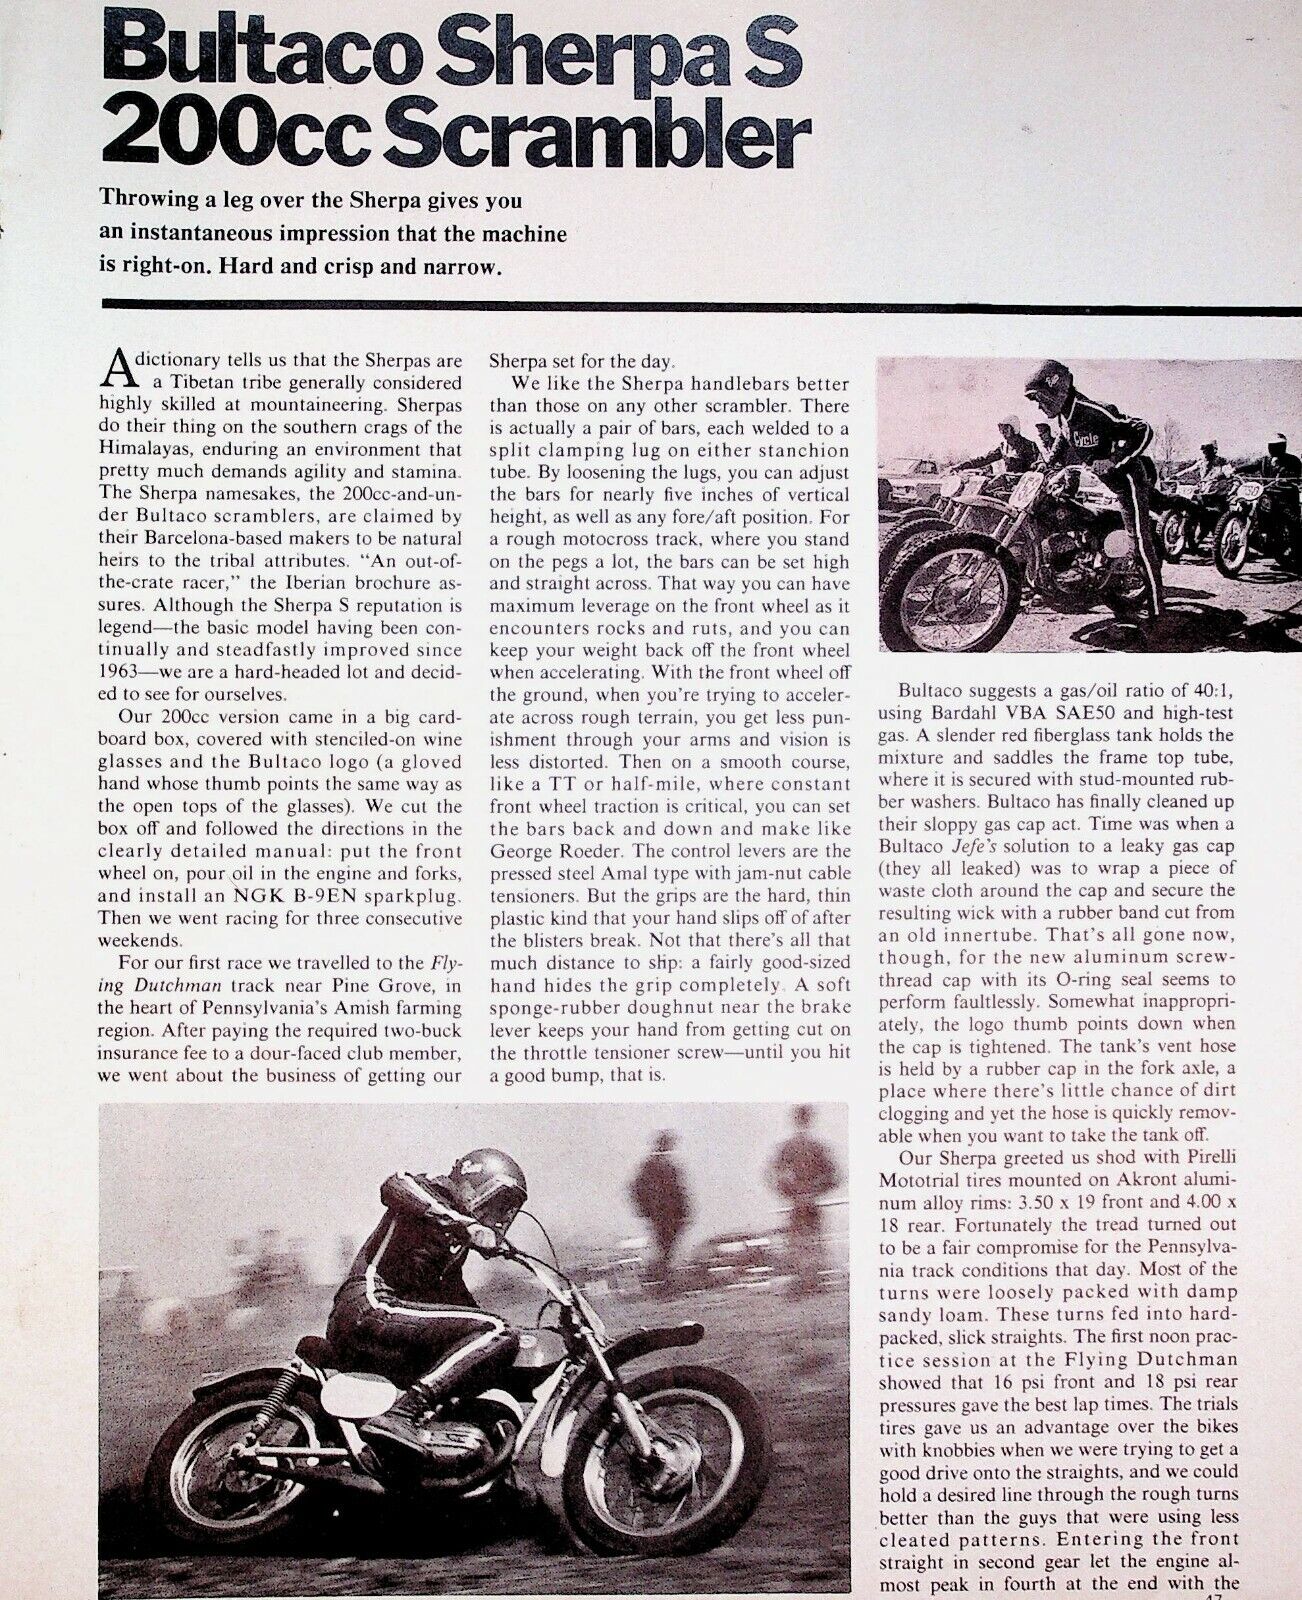 1970 Bultaco Sherpa S 200cc Scrambler - 5-page Vintage Motorcycle Test Article